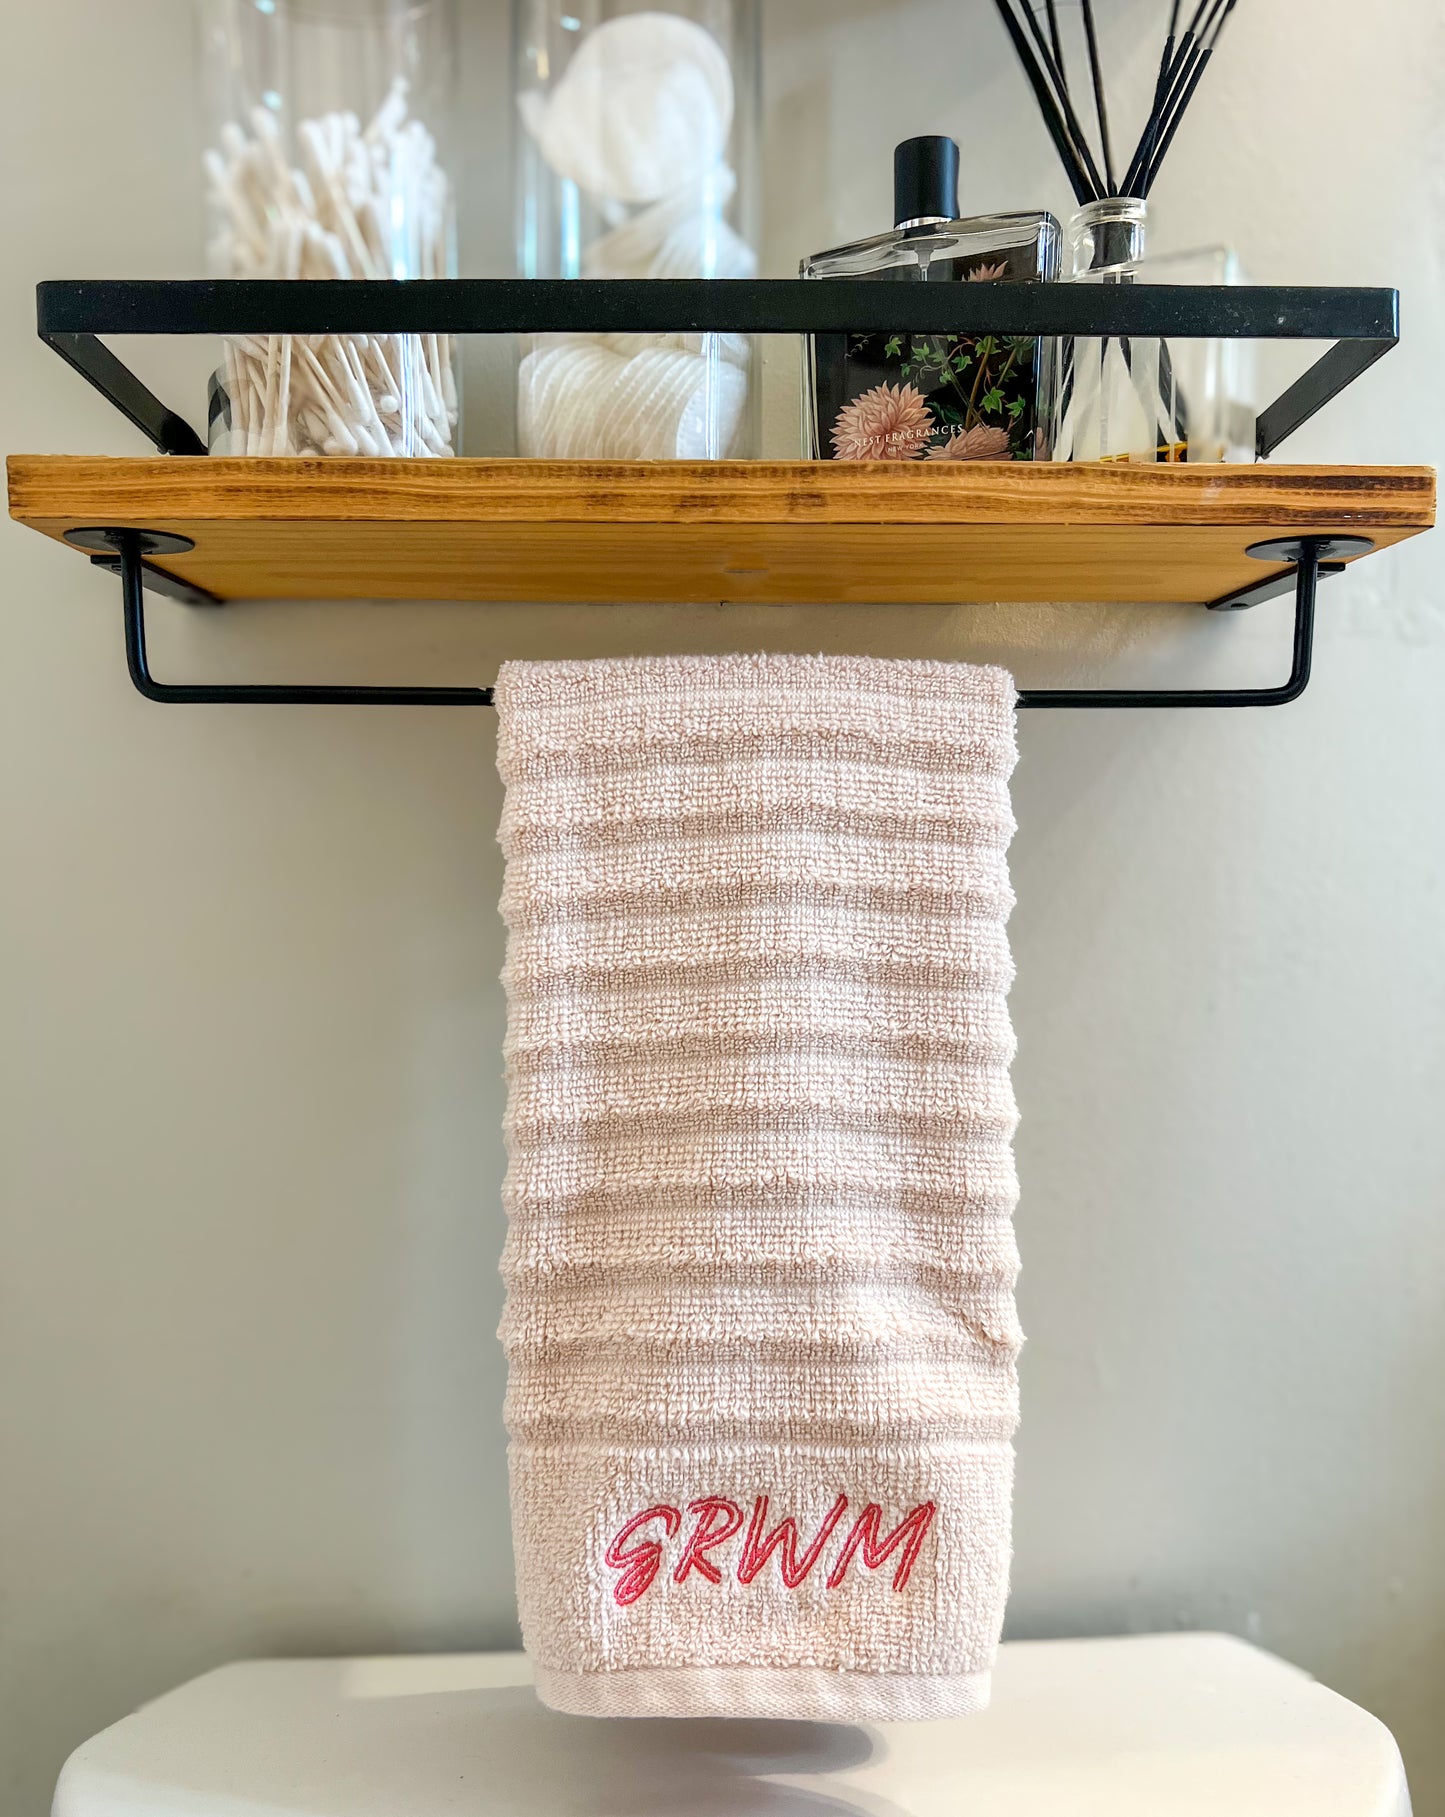 GRWM Hand Towel